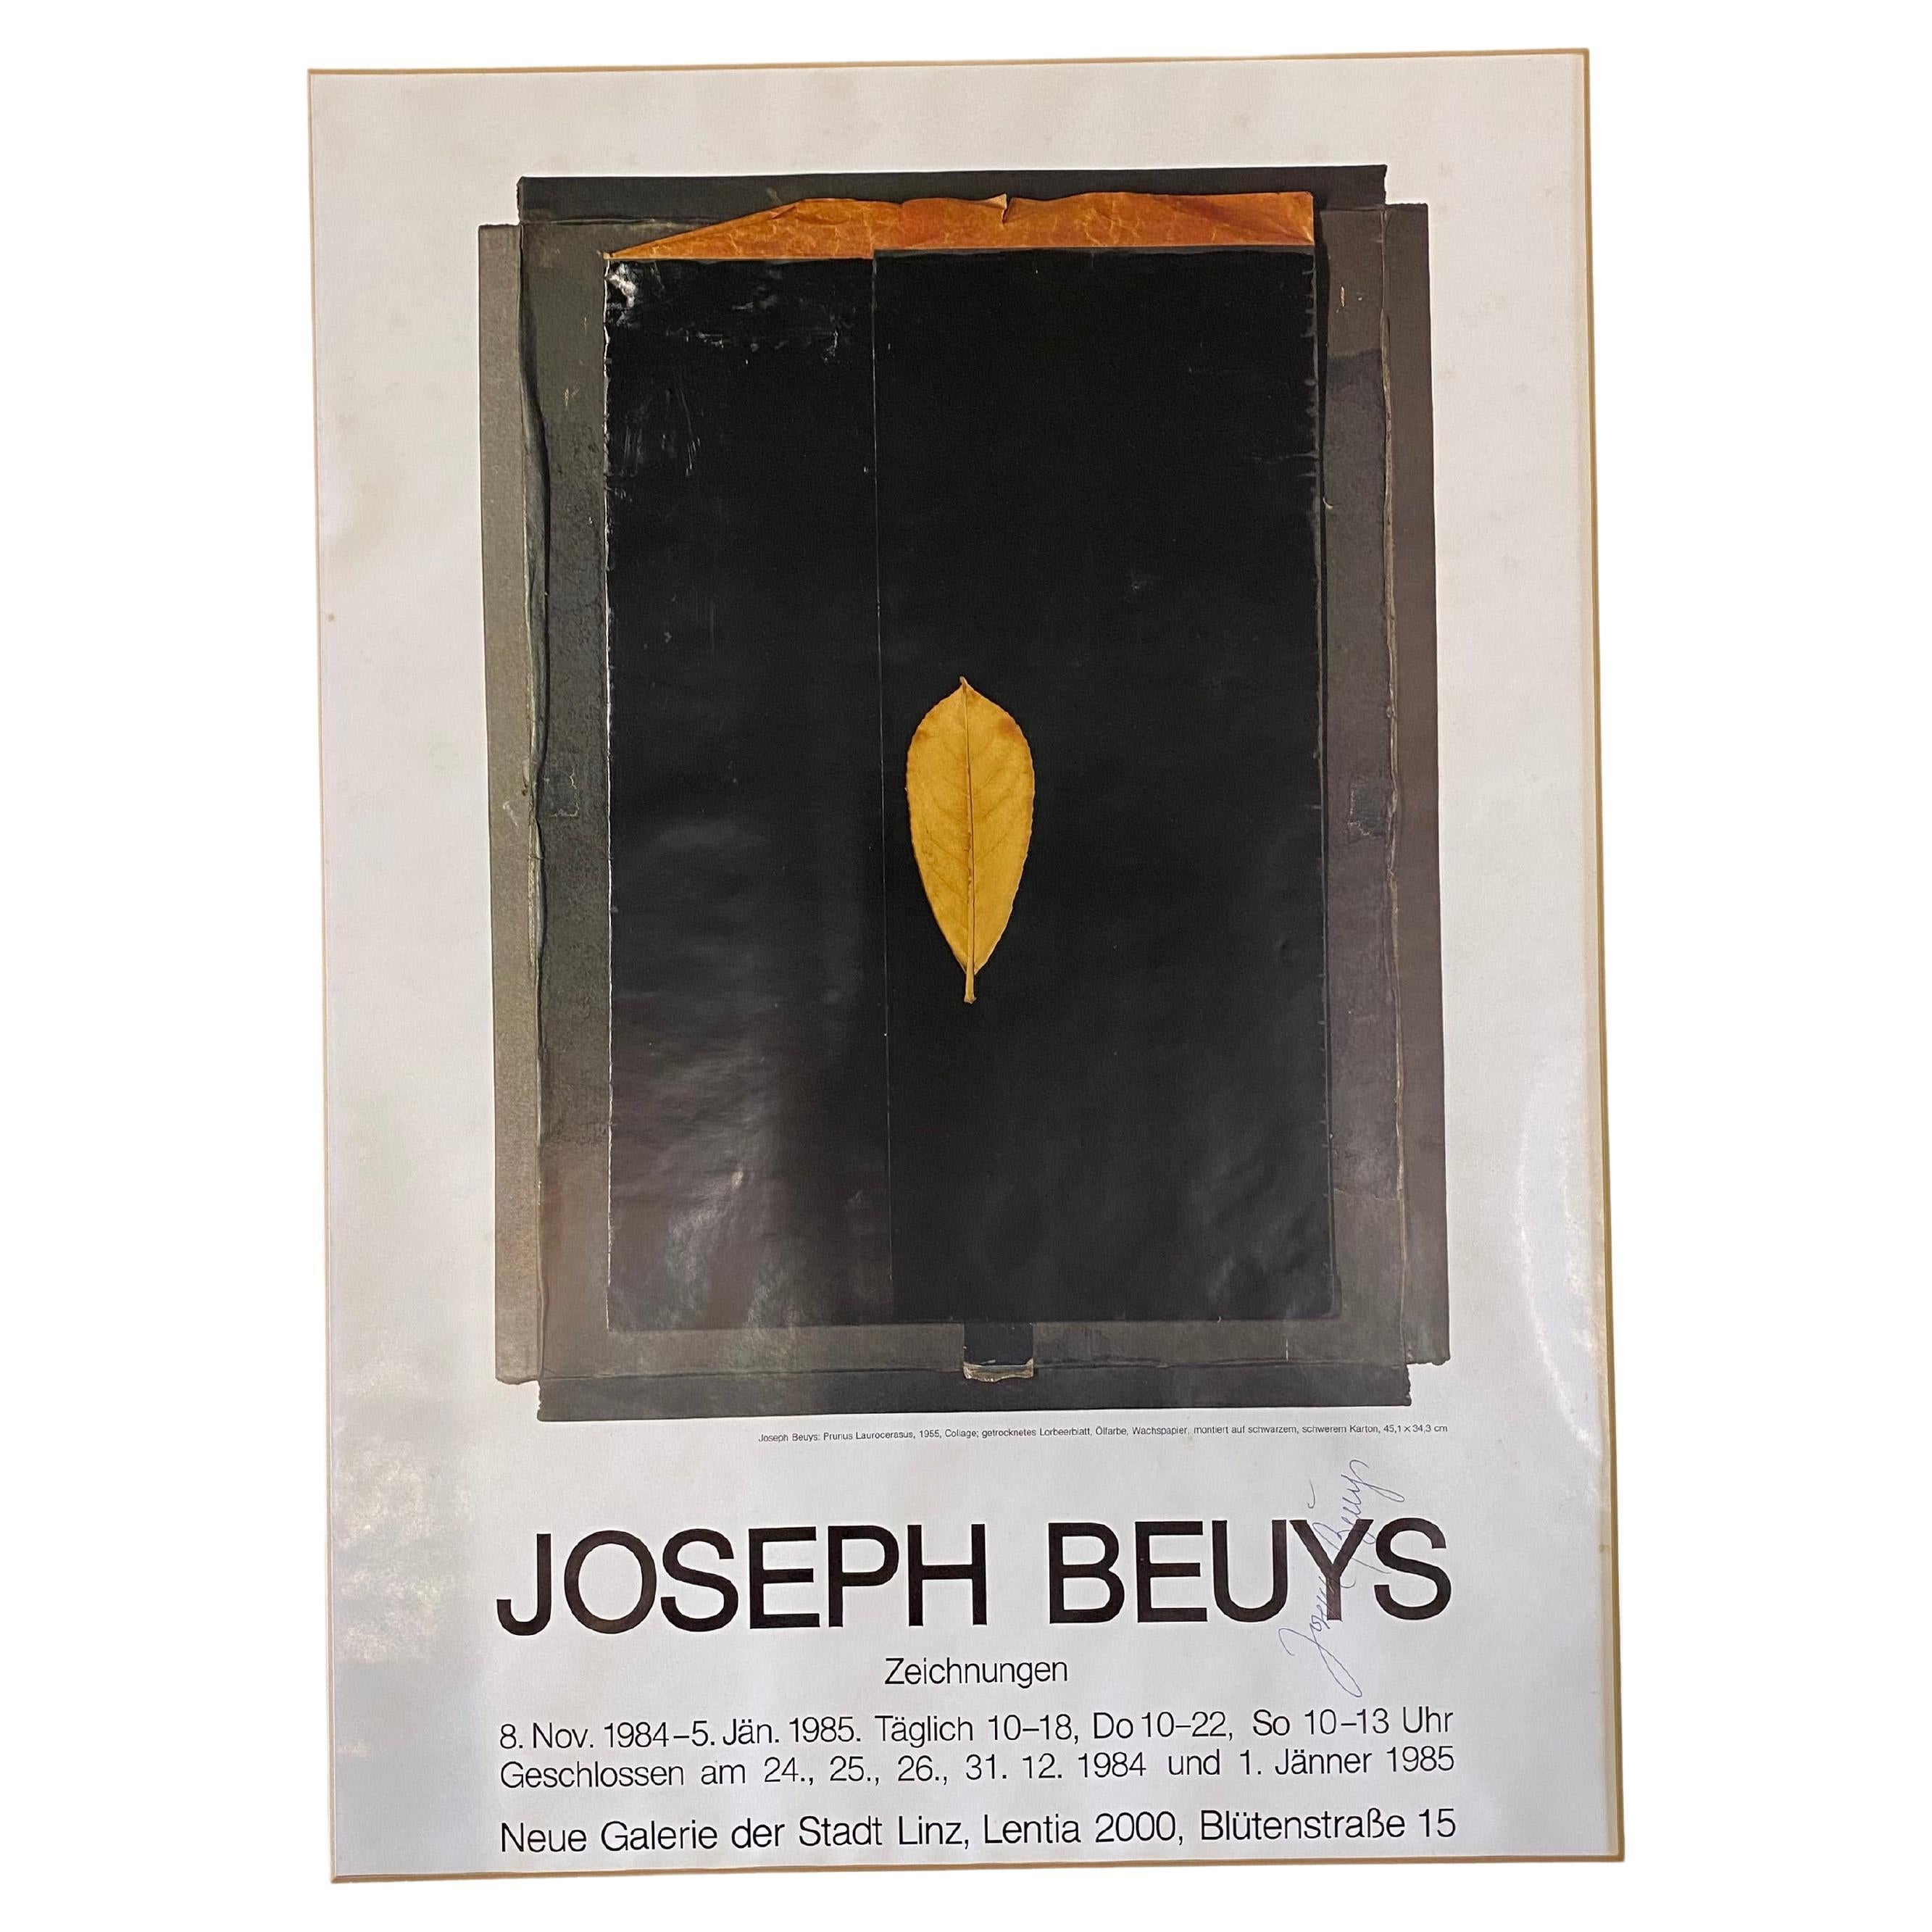 Affiche d'exposition signée par Joseph Beuys : Zeichnungen